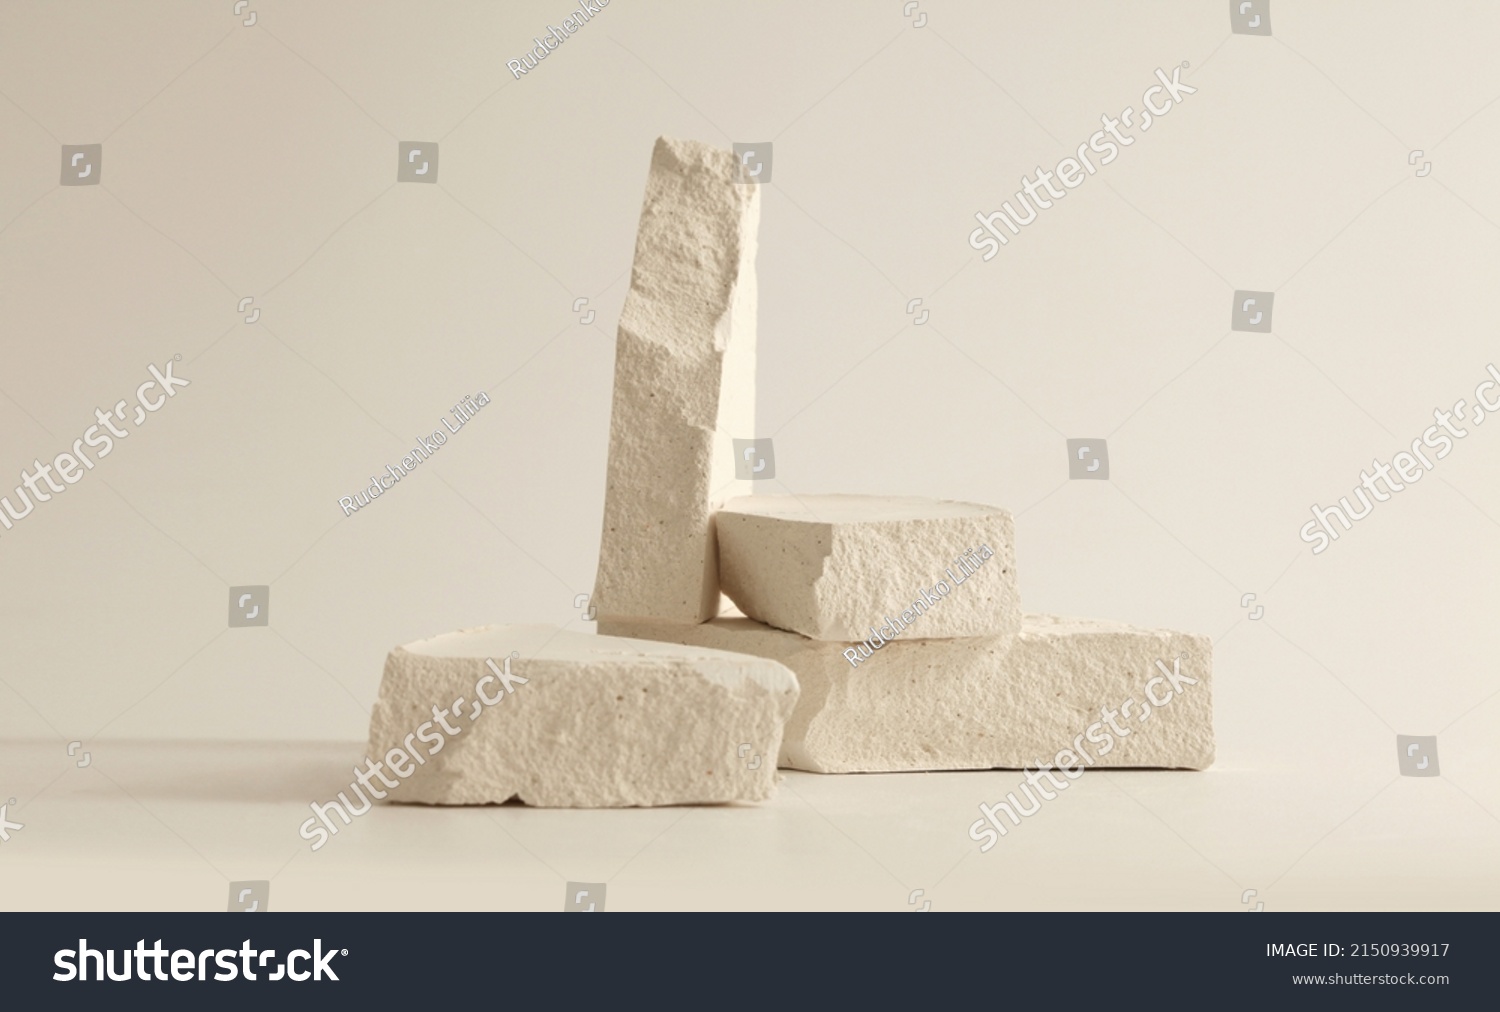 Empty stack of stones platform podium on beige background. Minimal empty display product presentation scene. #2150939917